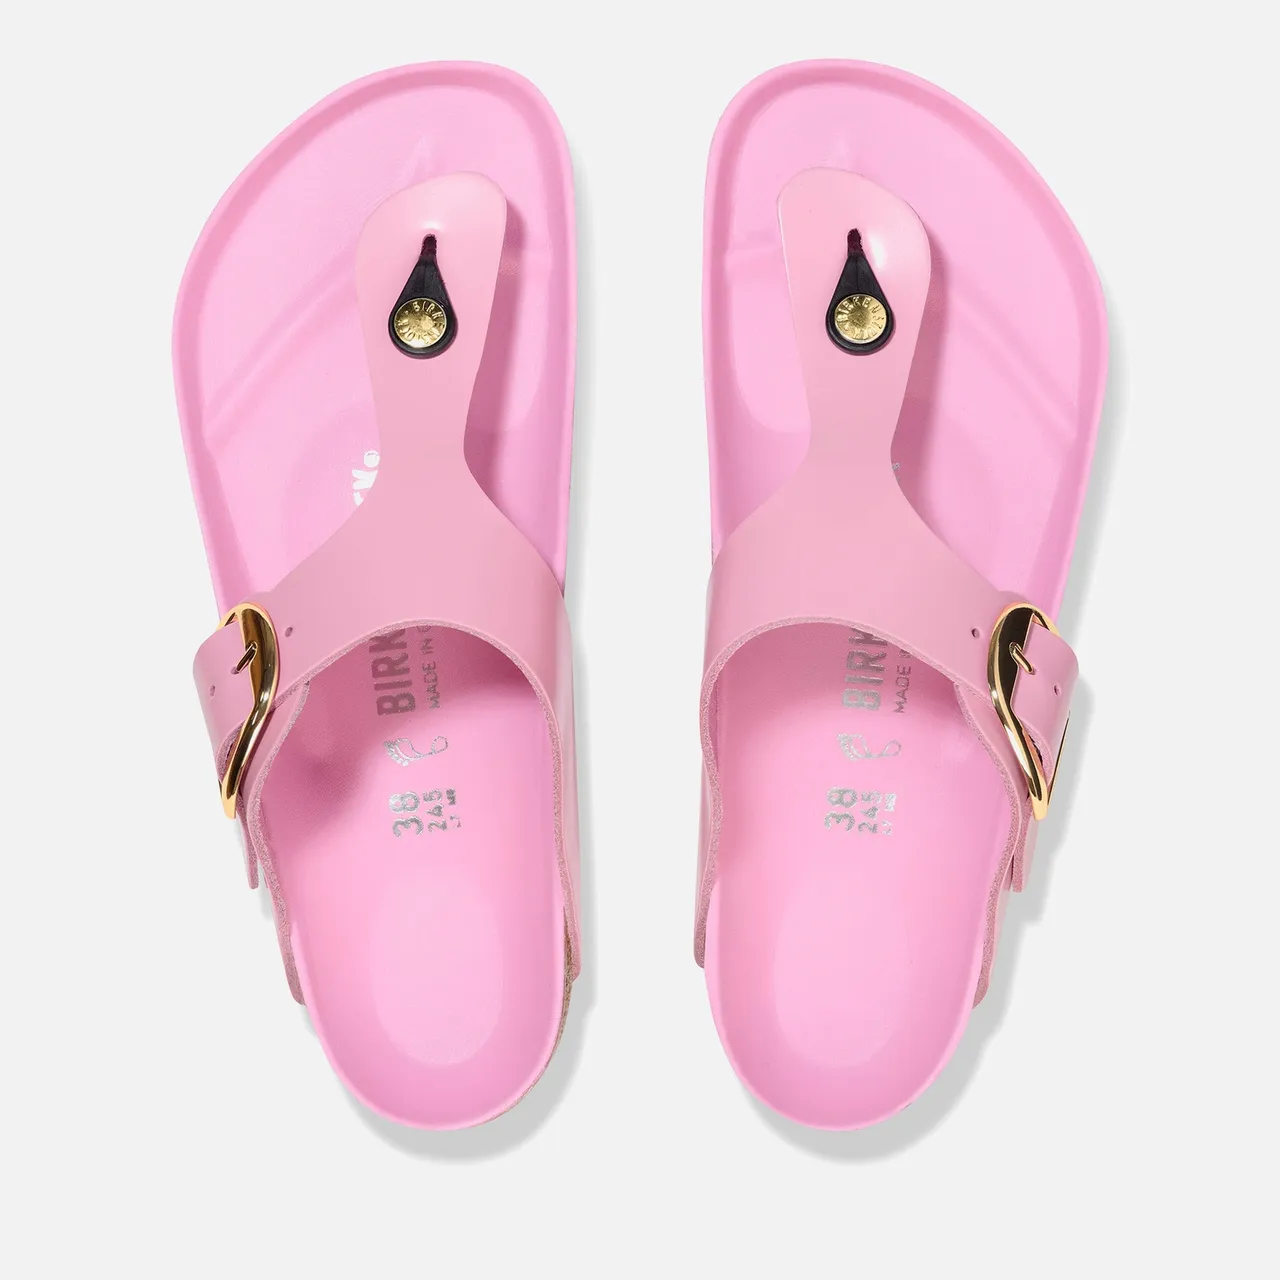 Birkenstock Women's Gizeh Big Buckle Patent-Leather Sandals - UK